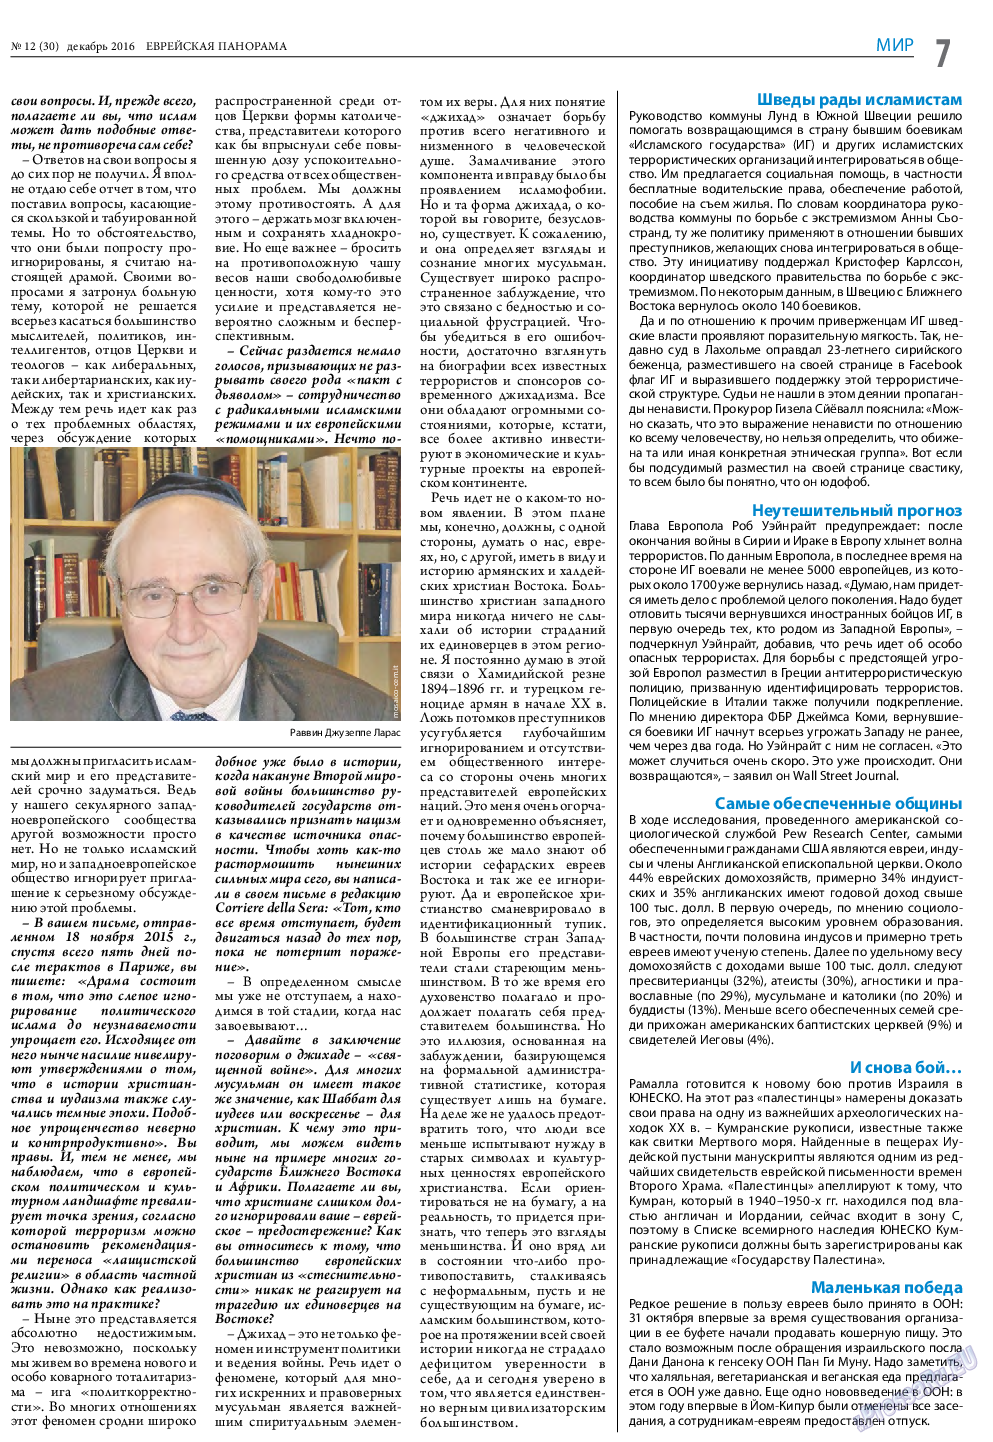 Еврейская панорама, газета. 2016 №12 стр.7